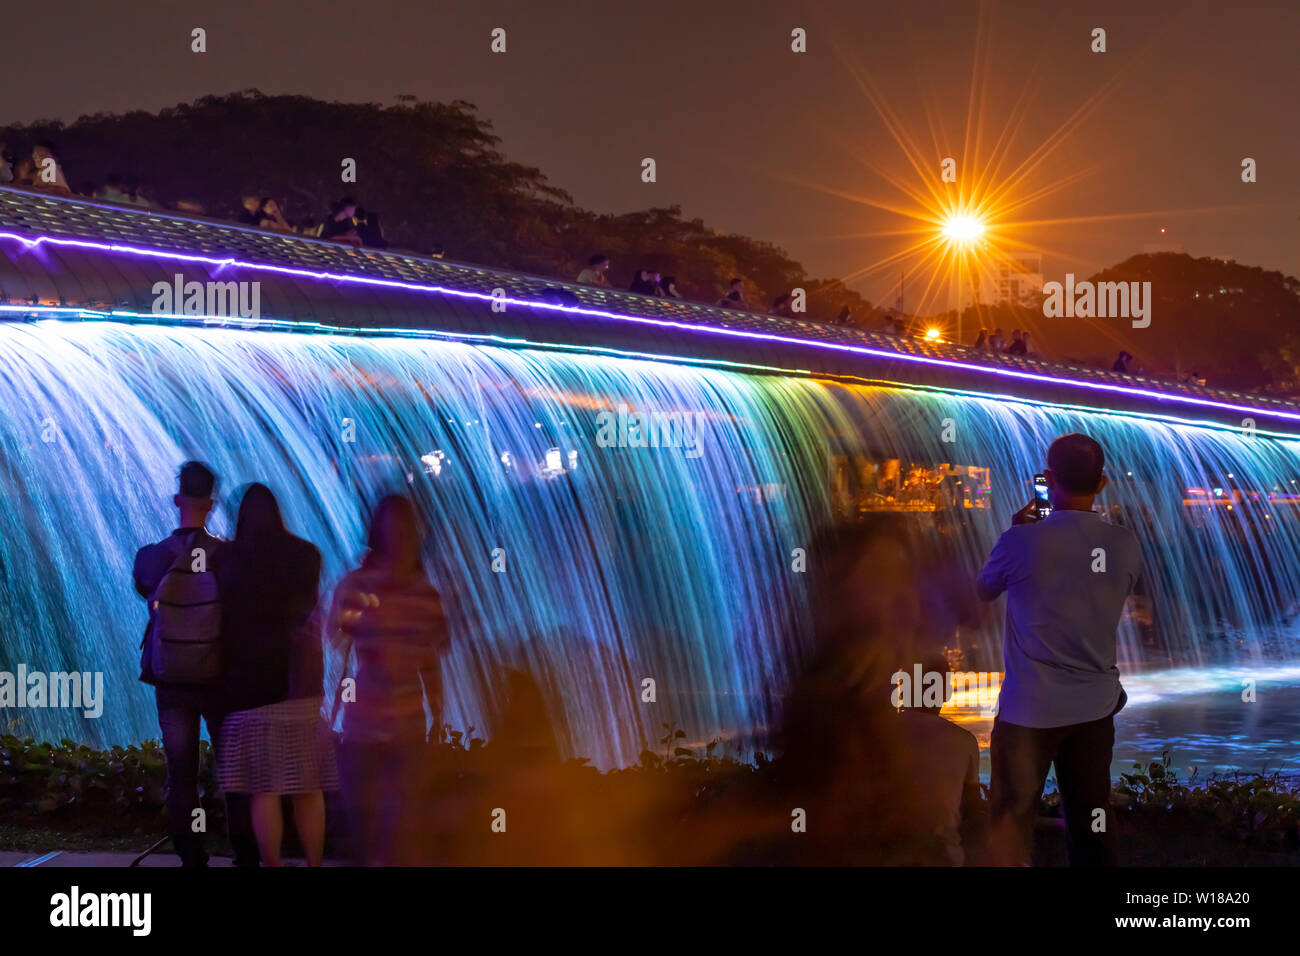 People enjoying the Starlight Bridge or anh sao bridge in phu my hung district of Ho Chi Minh City Vietnam. It is a solarpowered illuminated waterfall Stock Photo